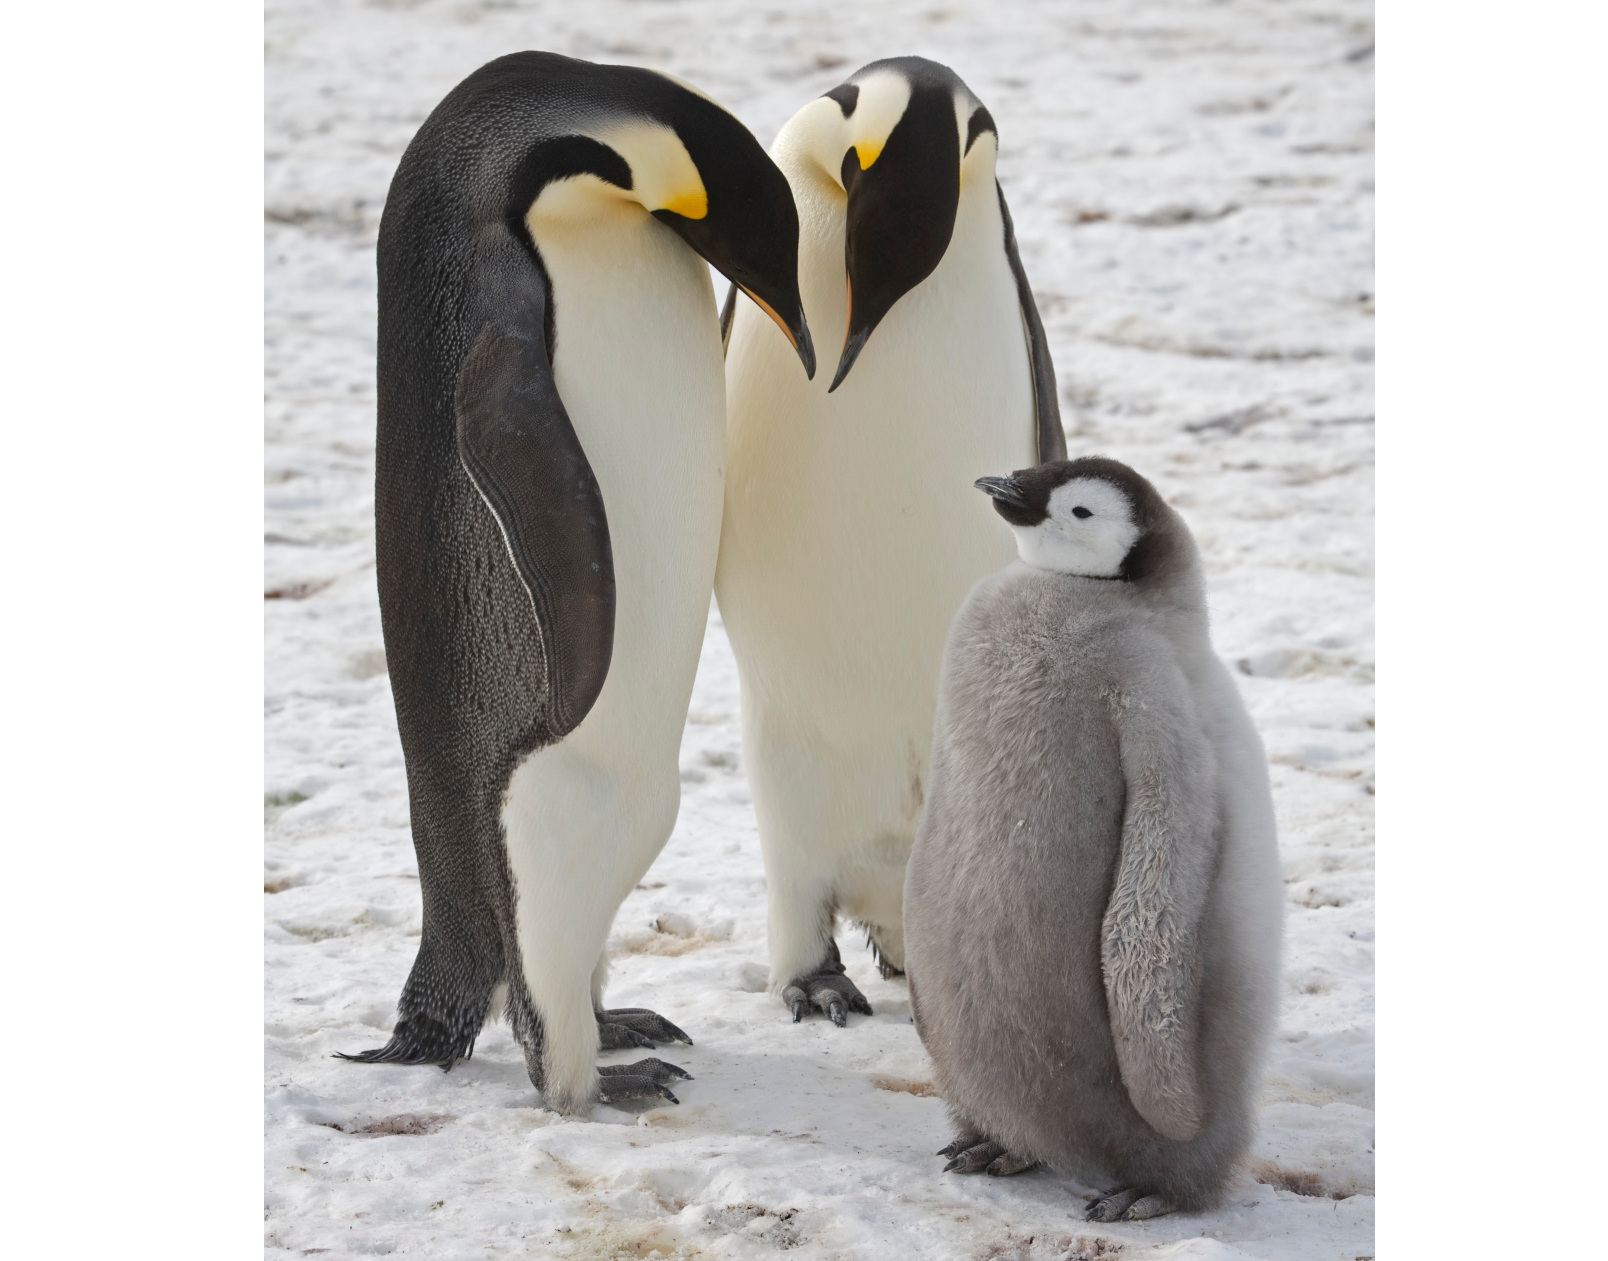 Tote Pinguin-Küken durch Meereisverlust 